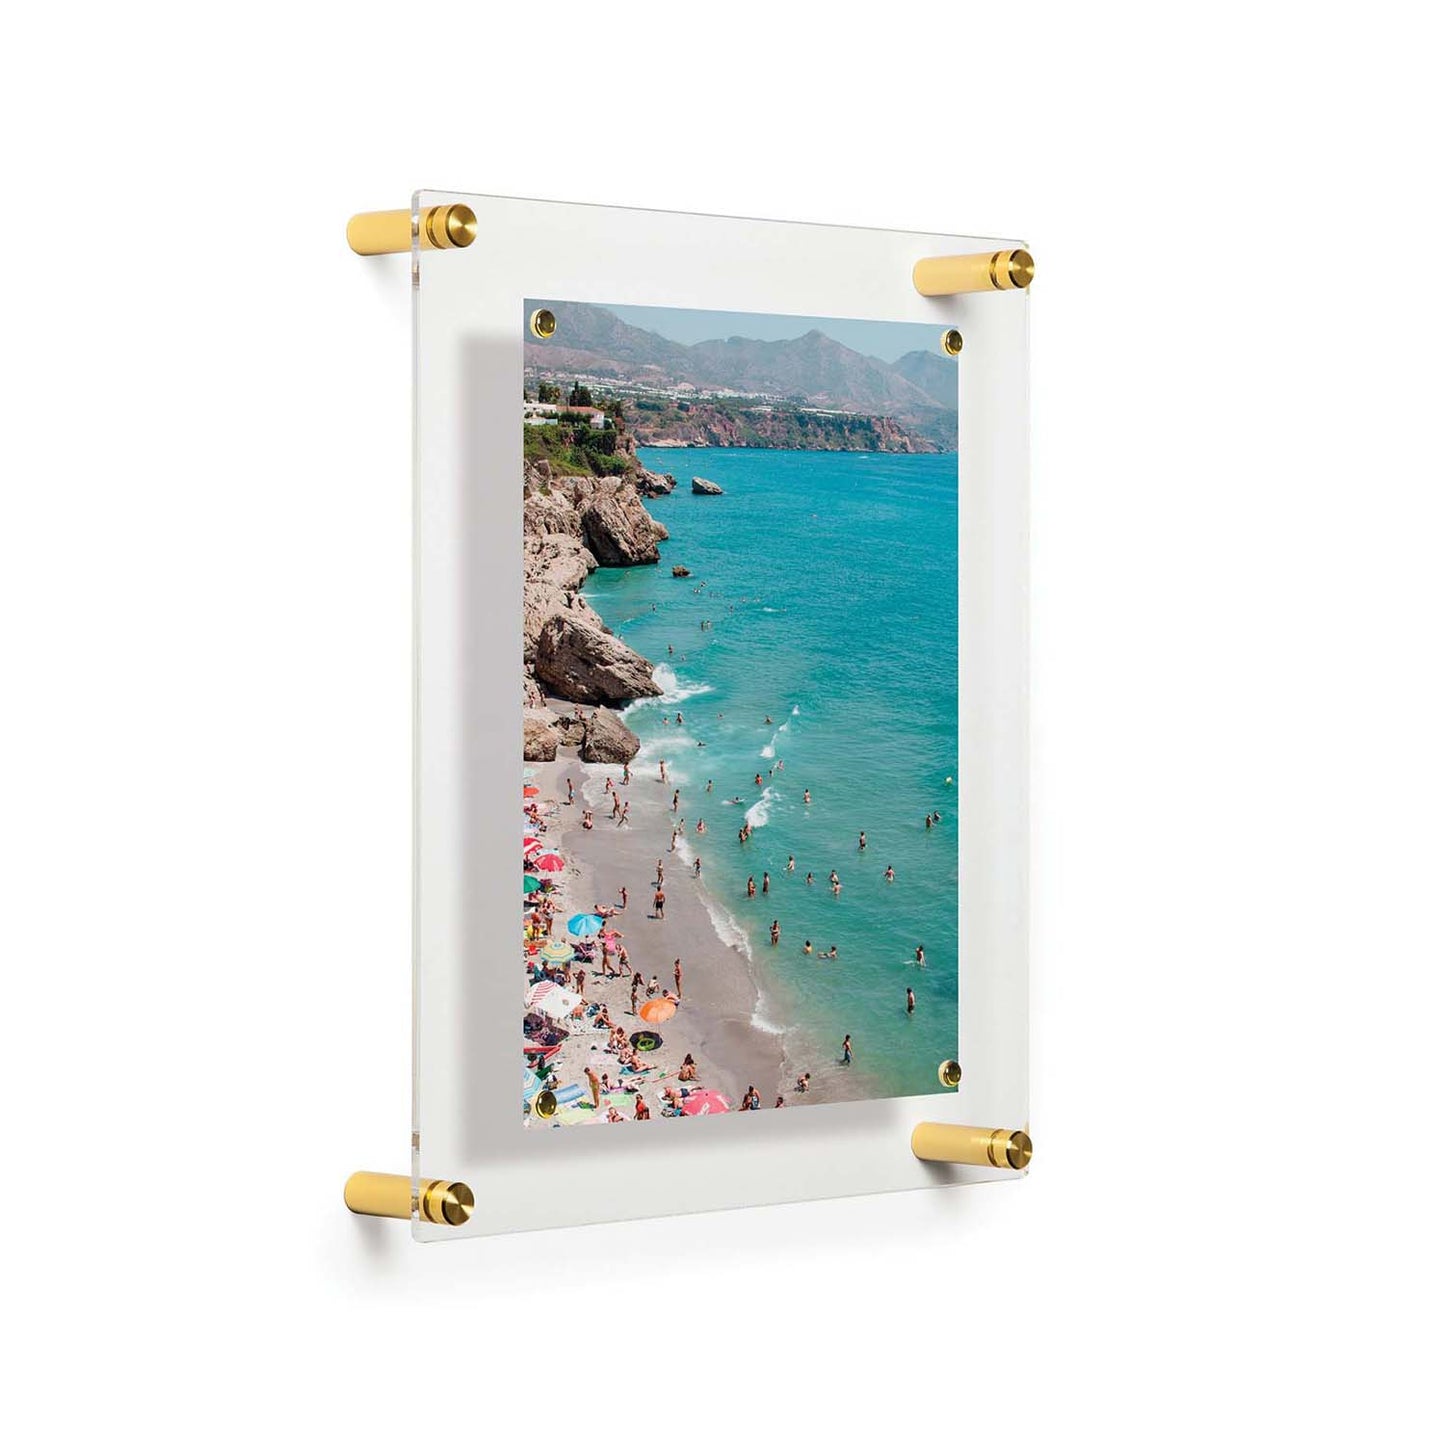 Single Panel Frames + Magnets Case Packs